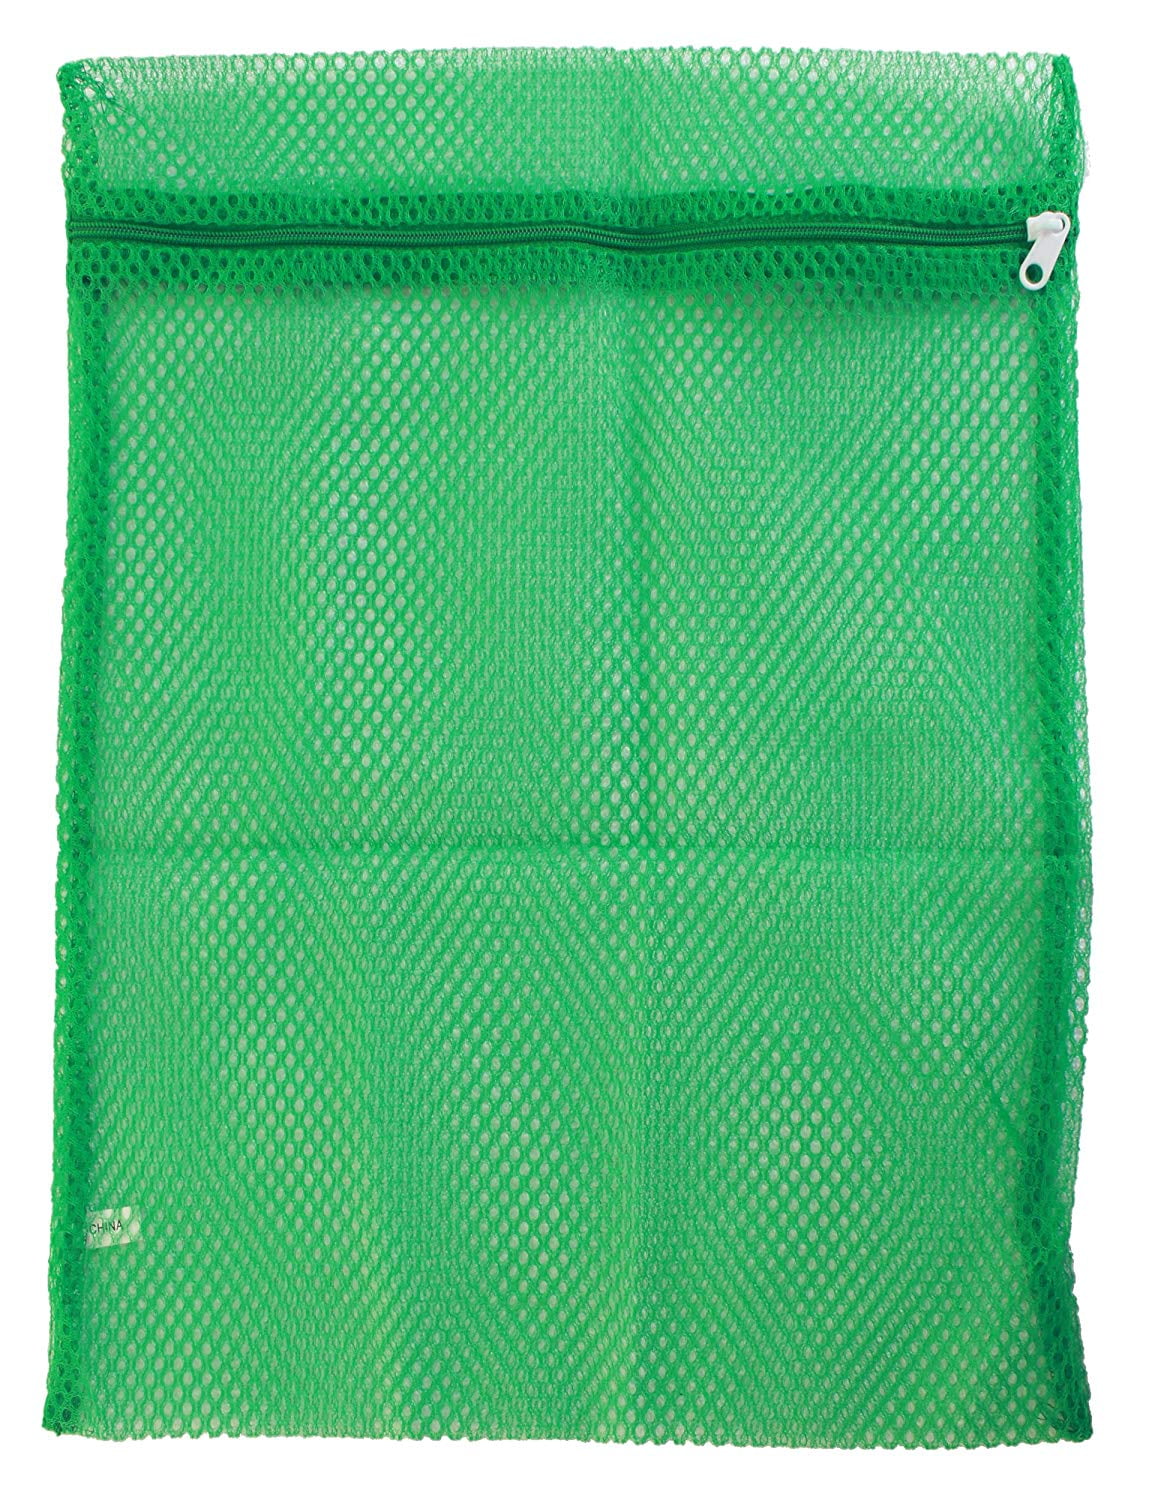 Gilbin Mesh Zippered Laundry Sock Bag 14x18 - Walmart.com